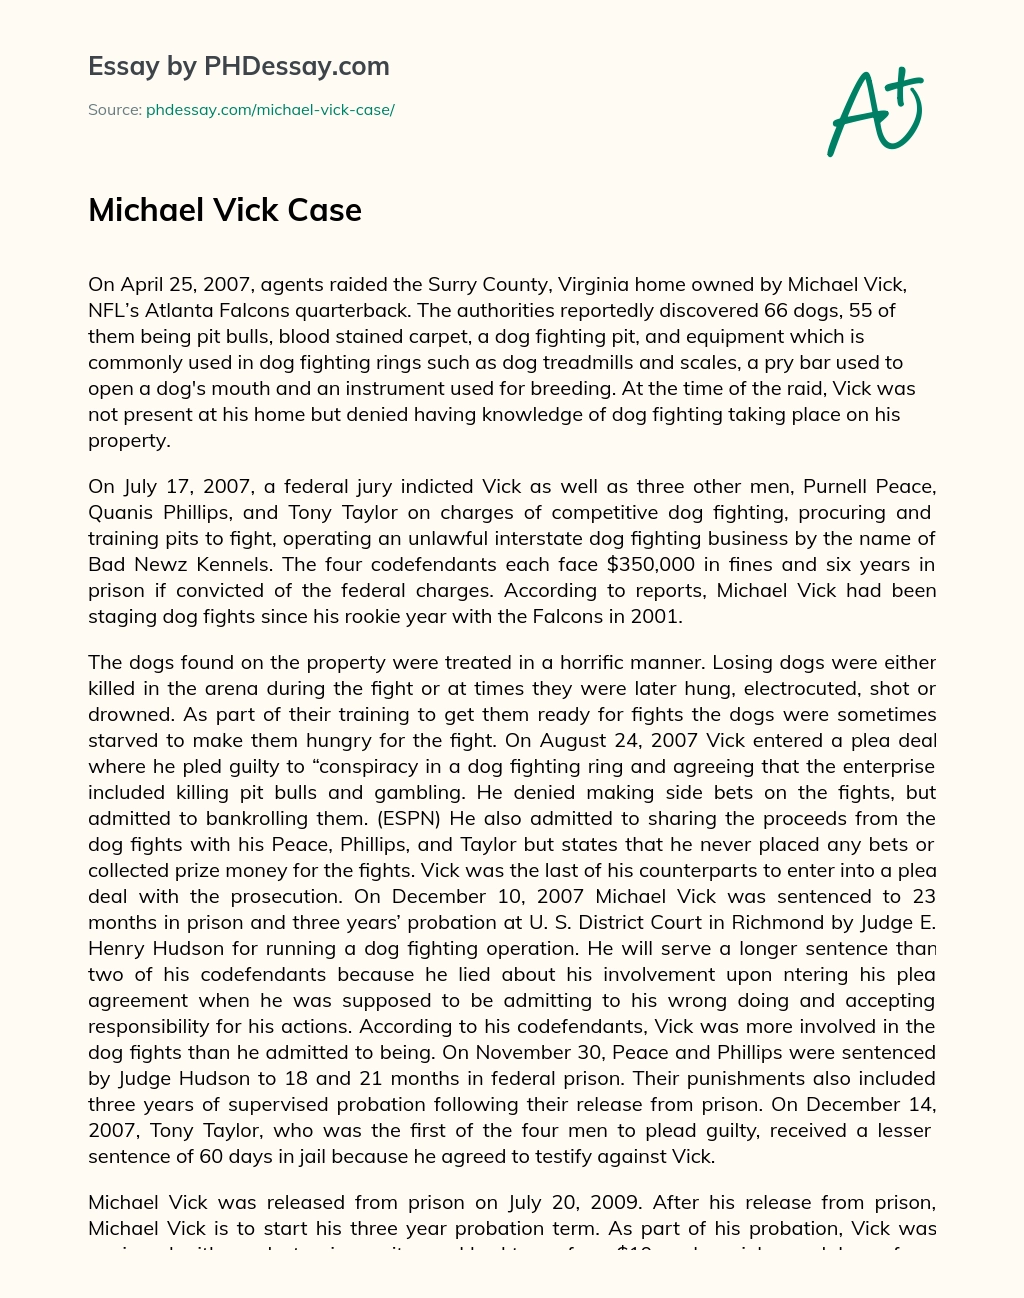 Michael Vick Case essay